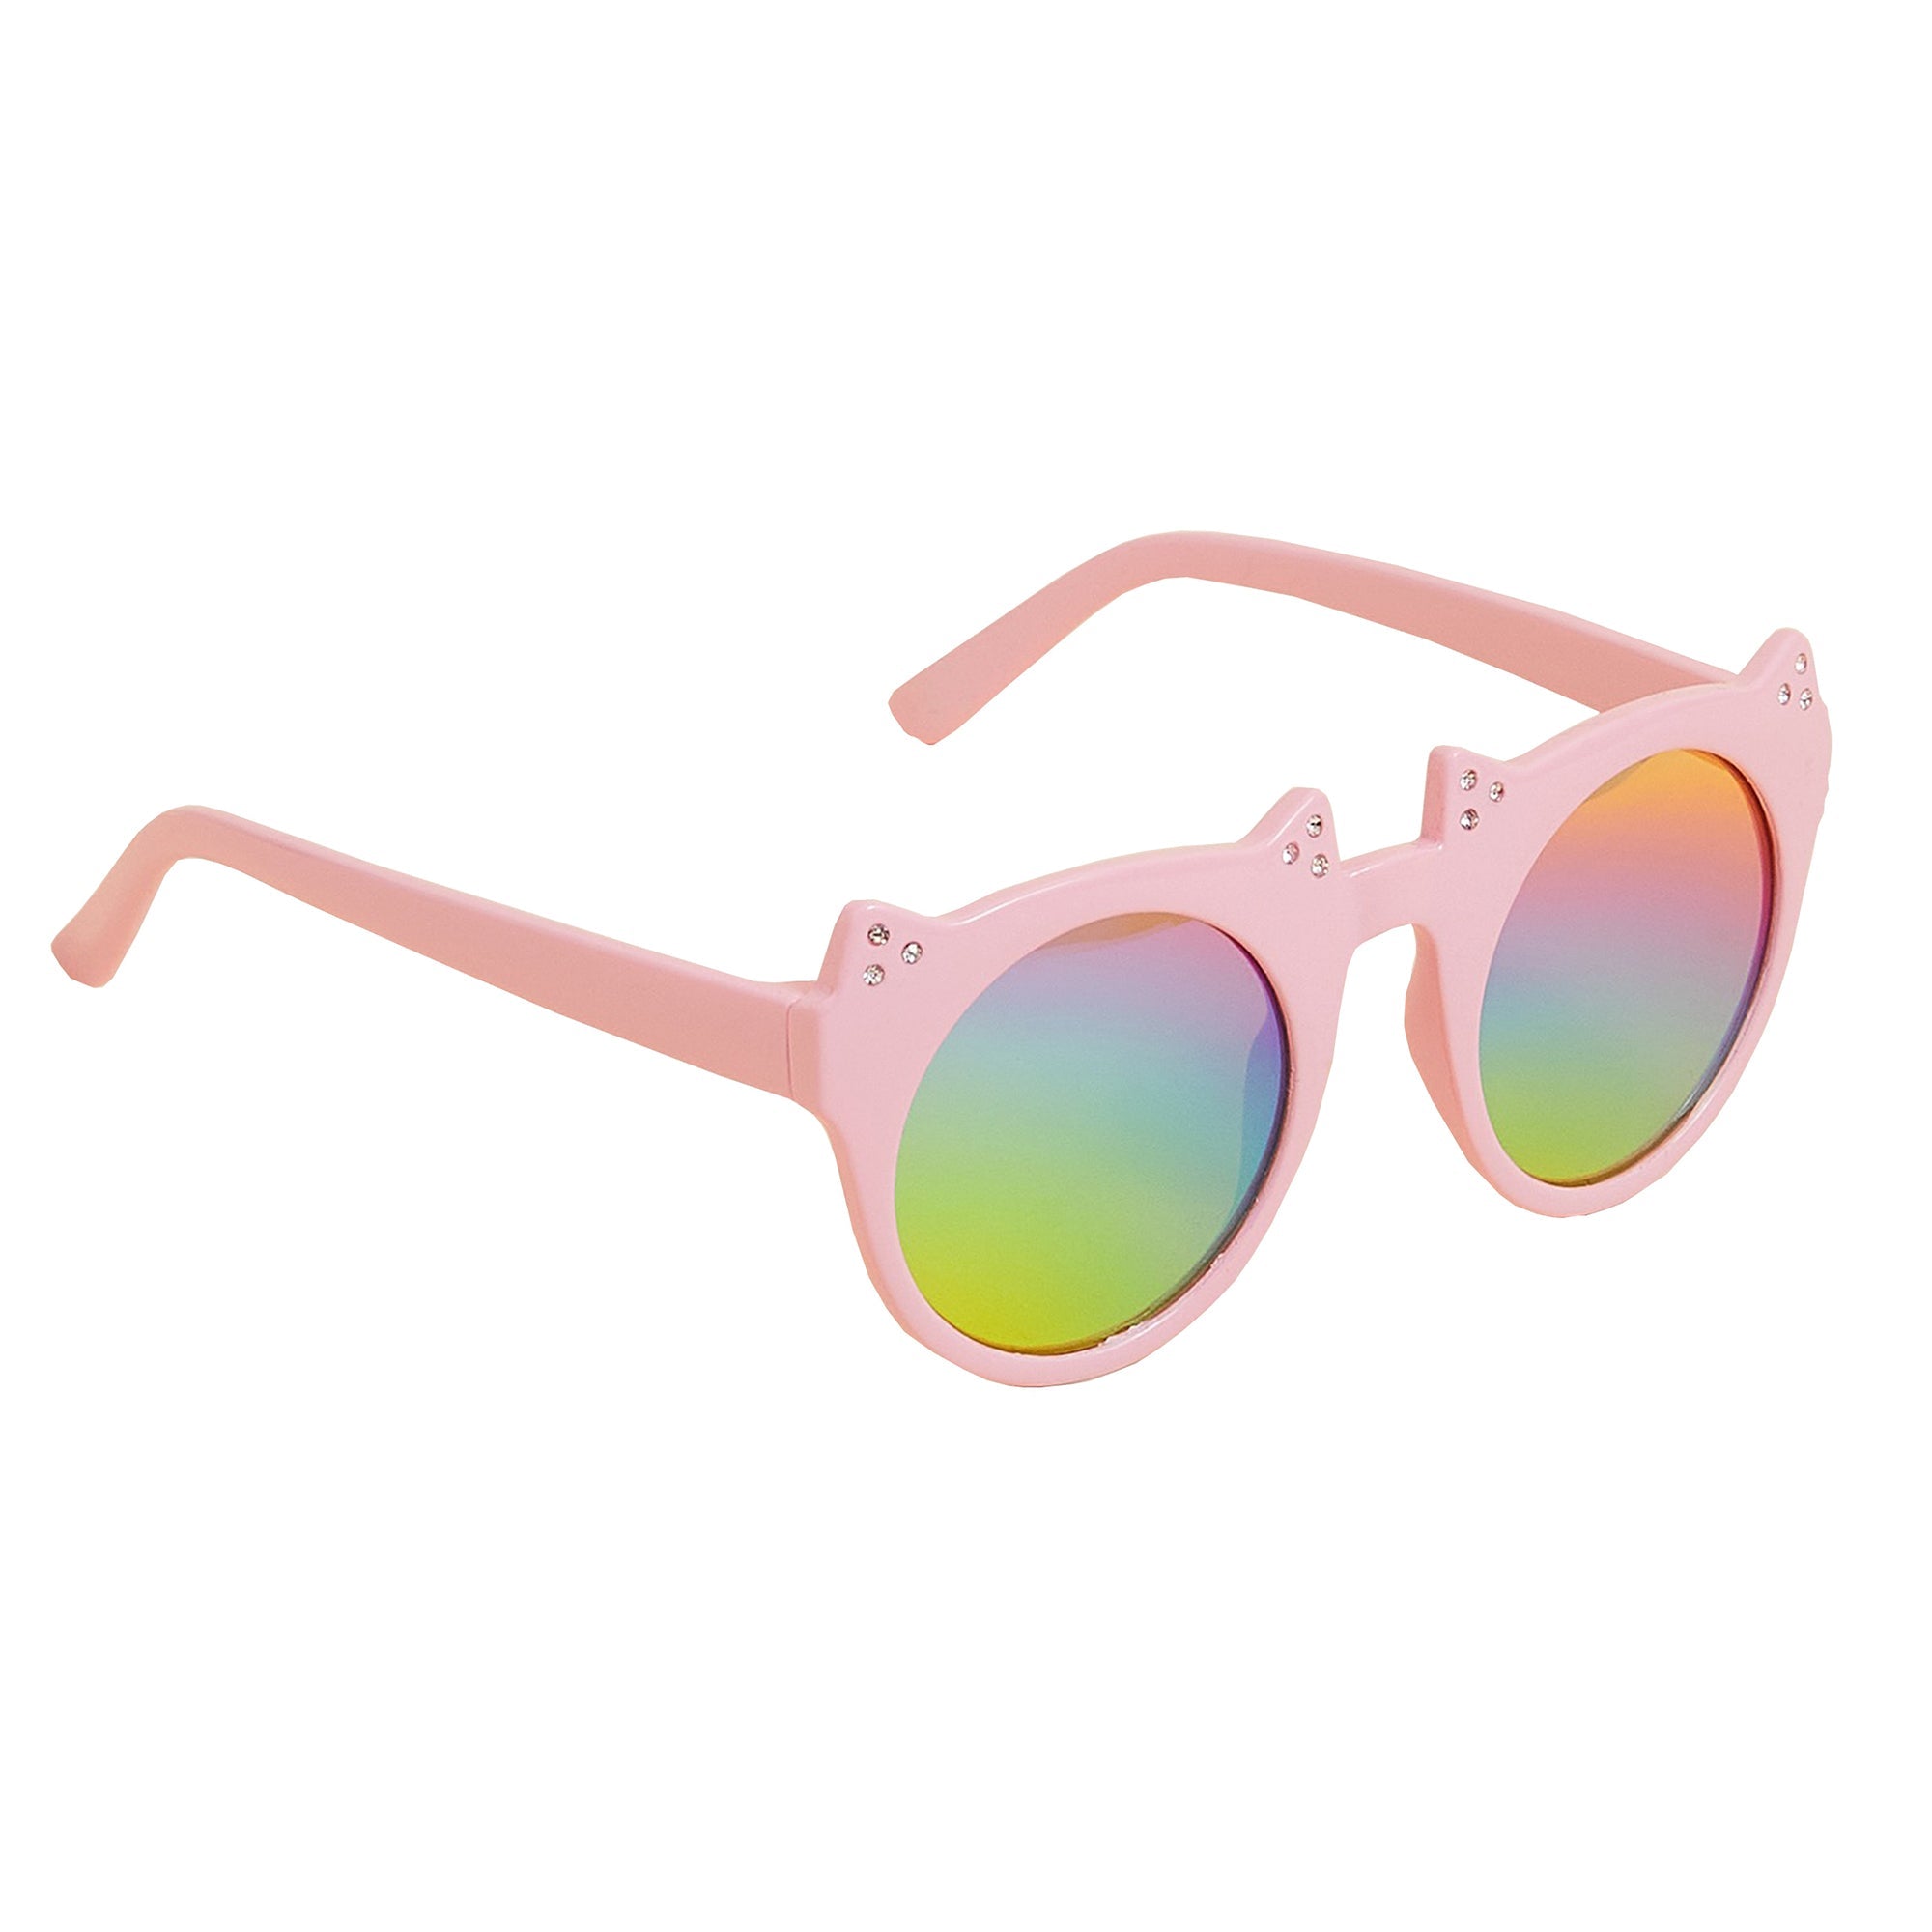 Accessorize London Girl's Cat Sunglasses